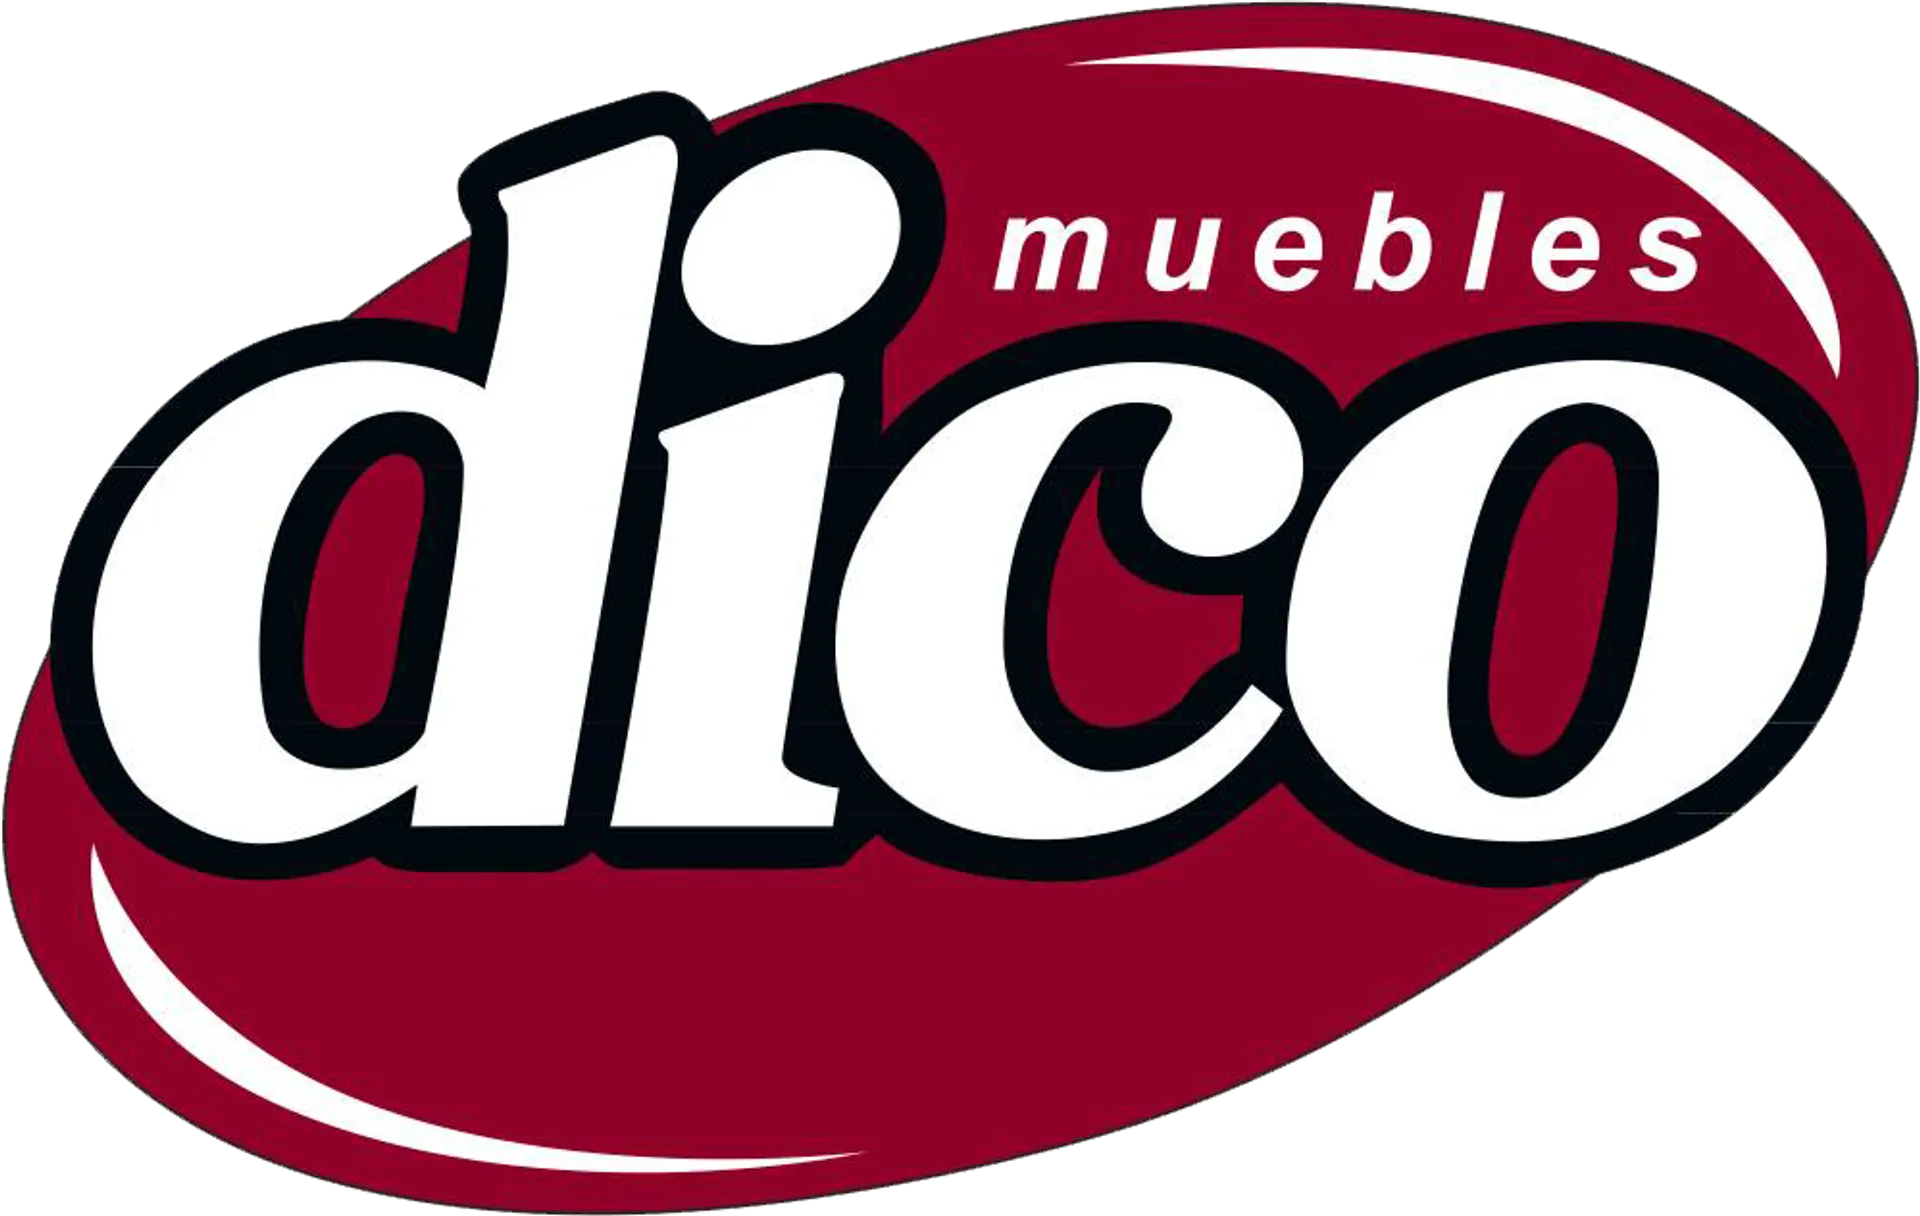 MUEBLES DICO logo